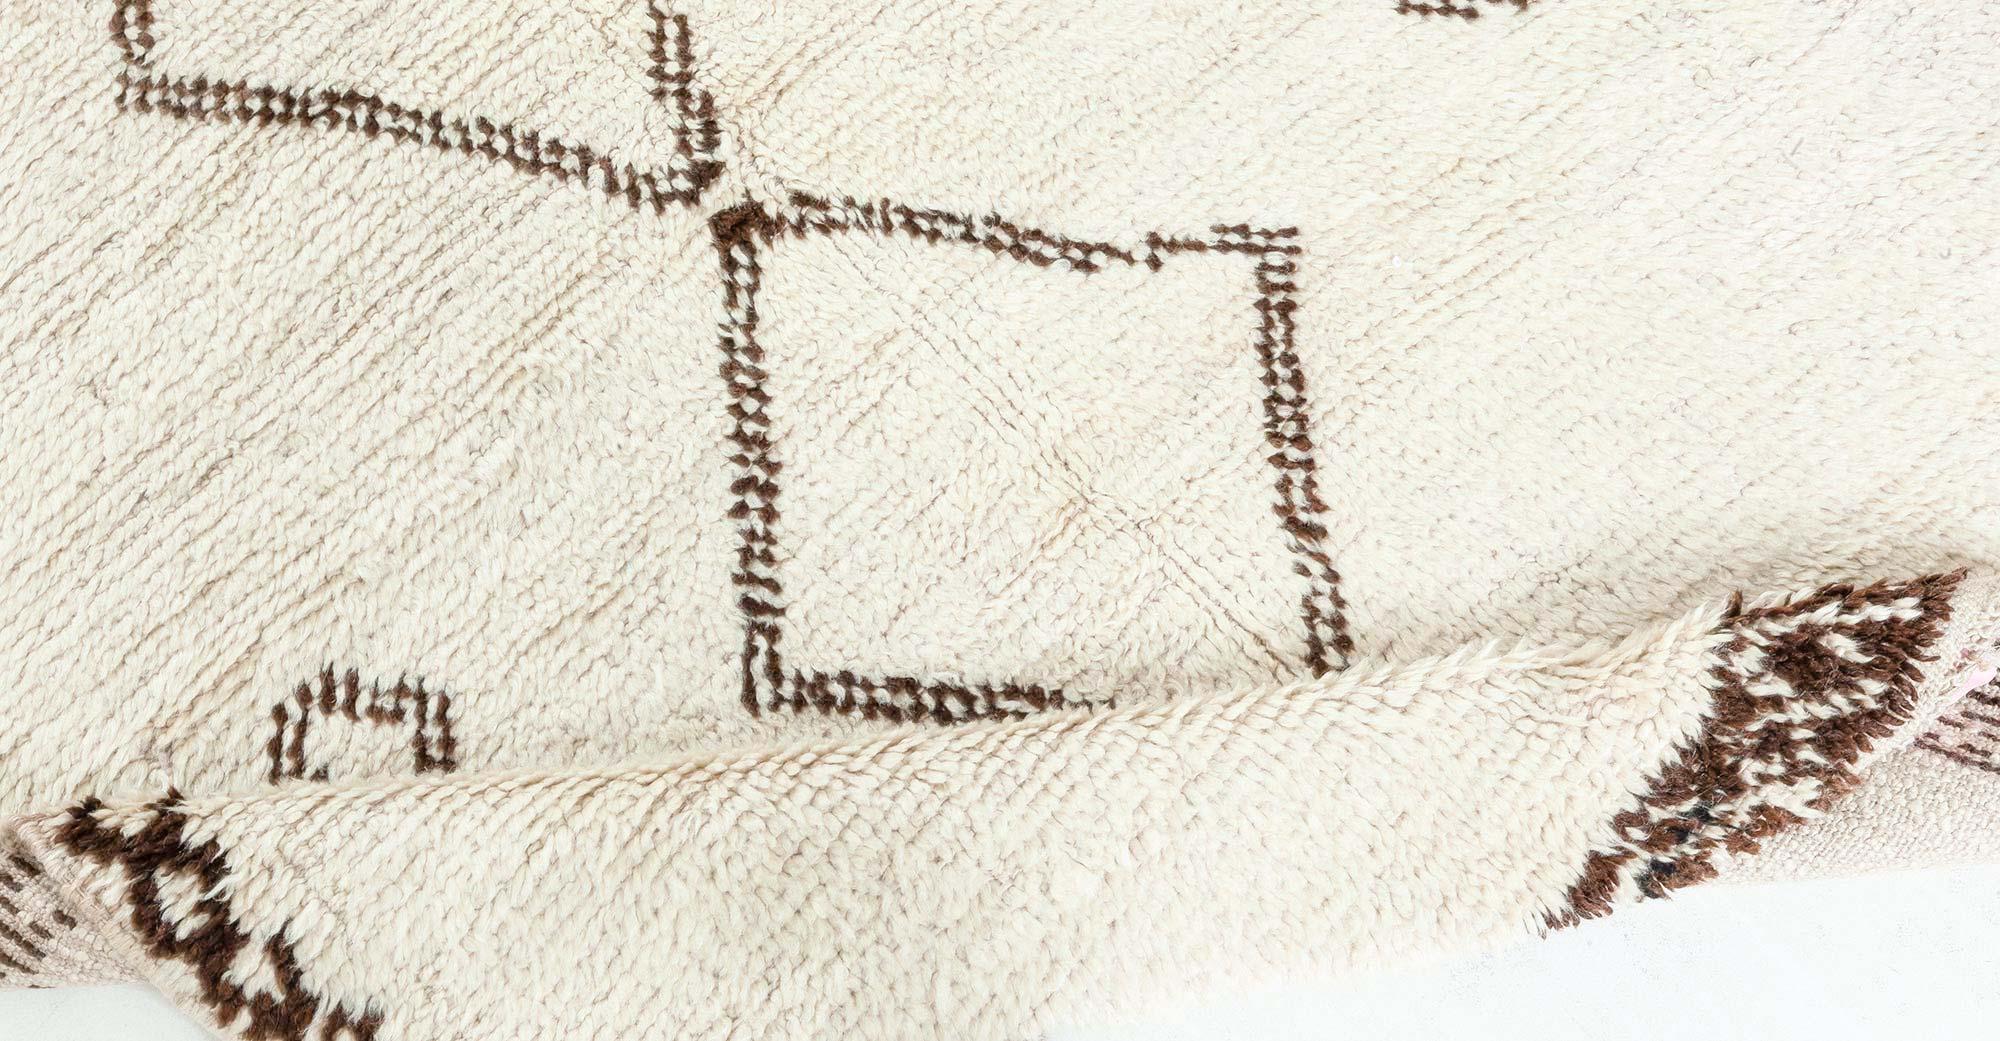 Midcentury Moroccan Geometric Wool Rug
Size: 4'6